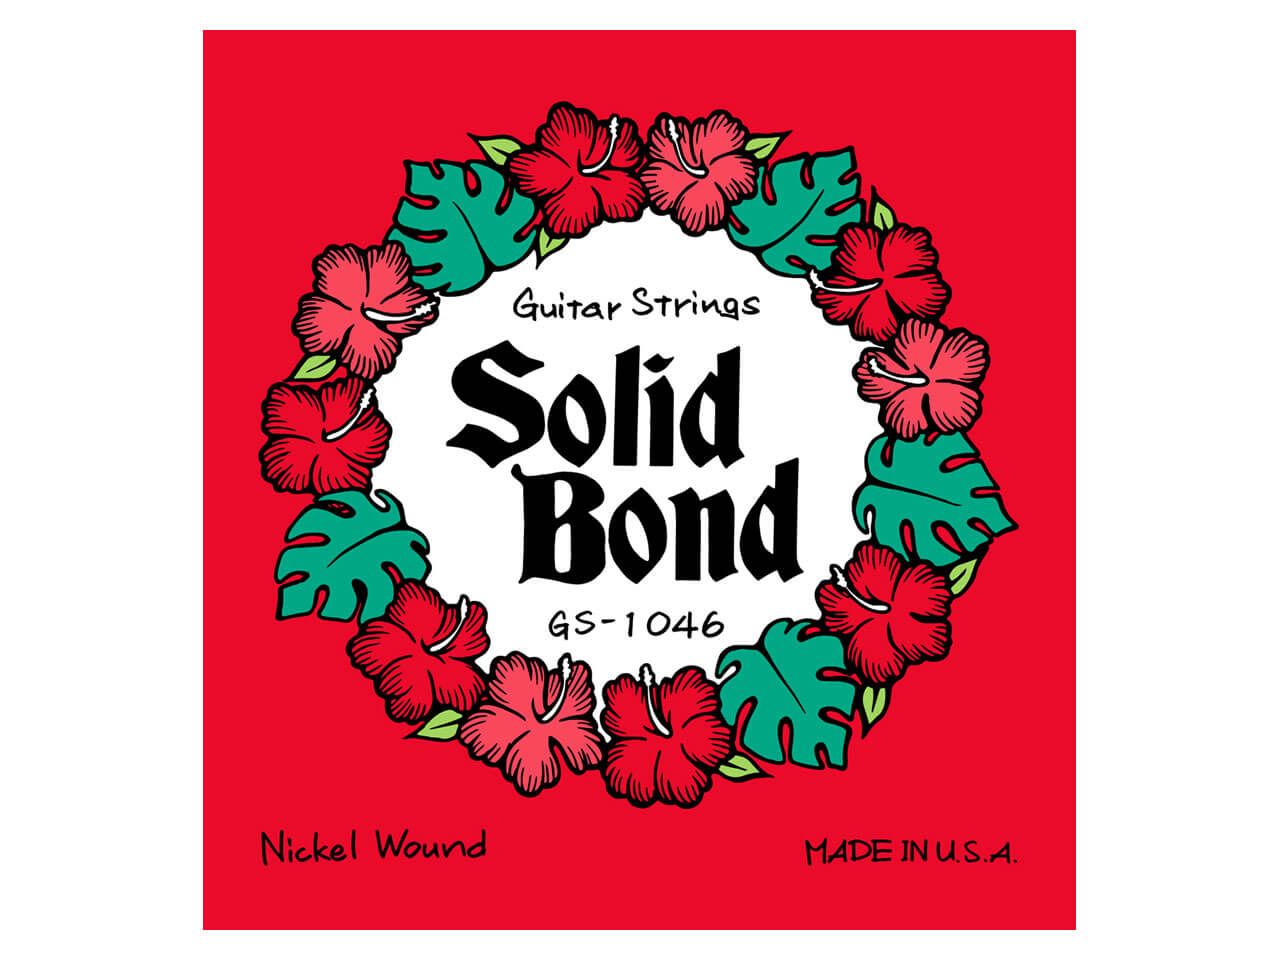 Solid Bond(ソリッドボンド) Guitar Strings [GS-1046] (エレキギター弦)